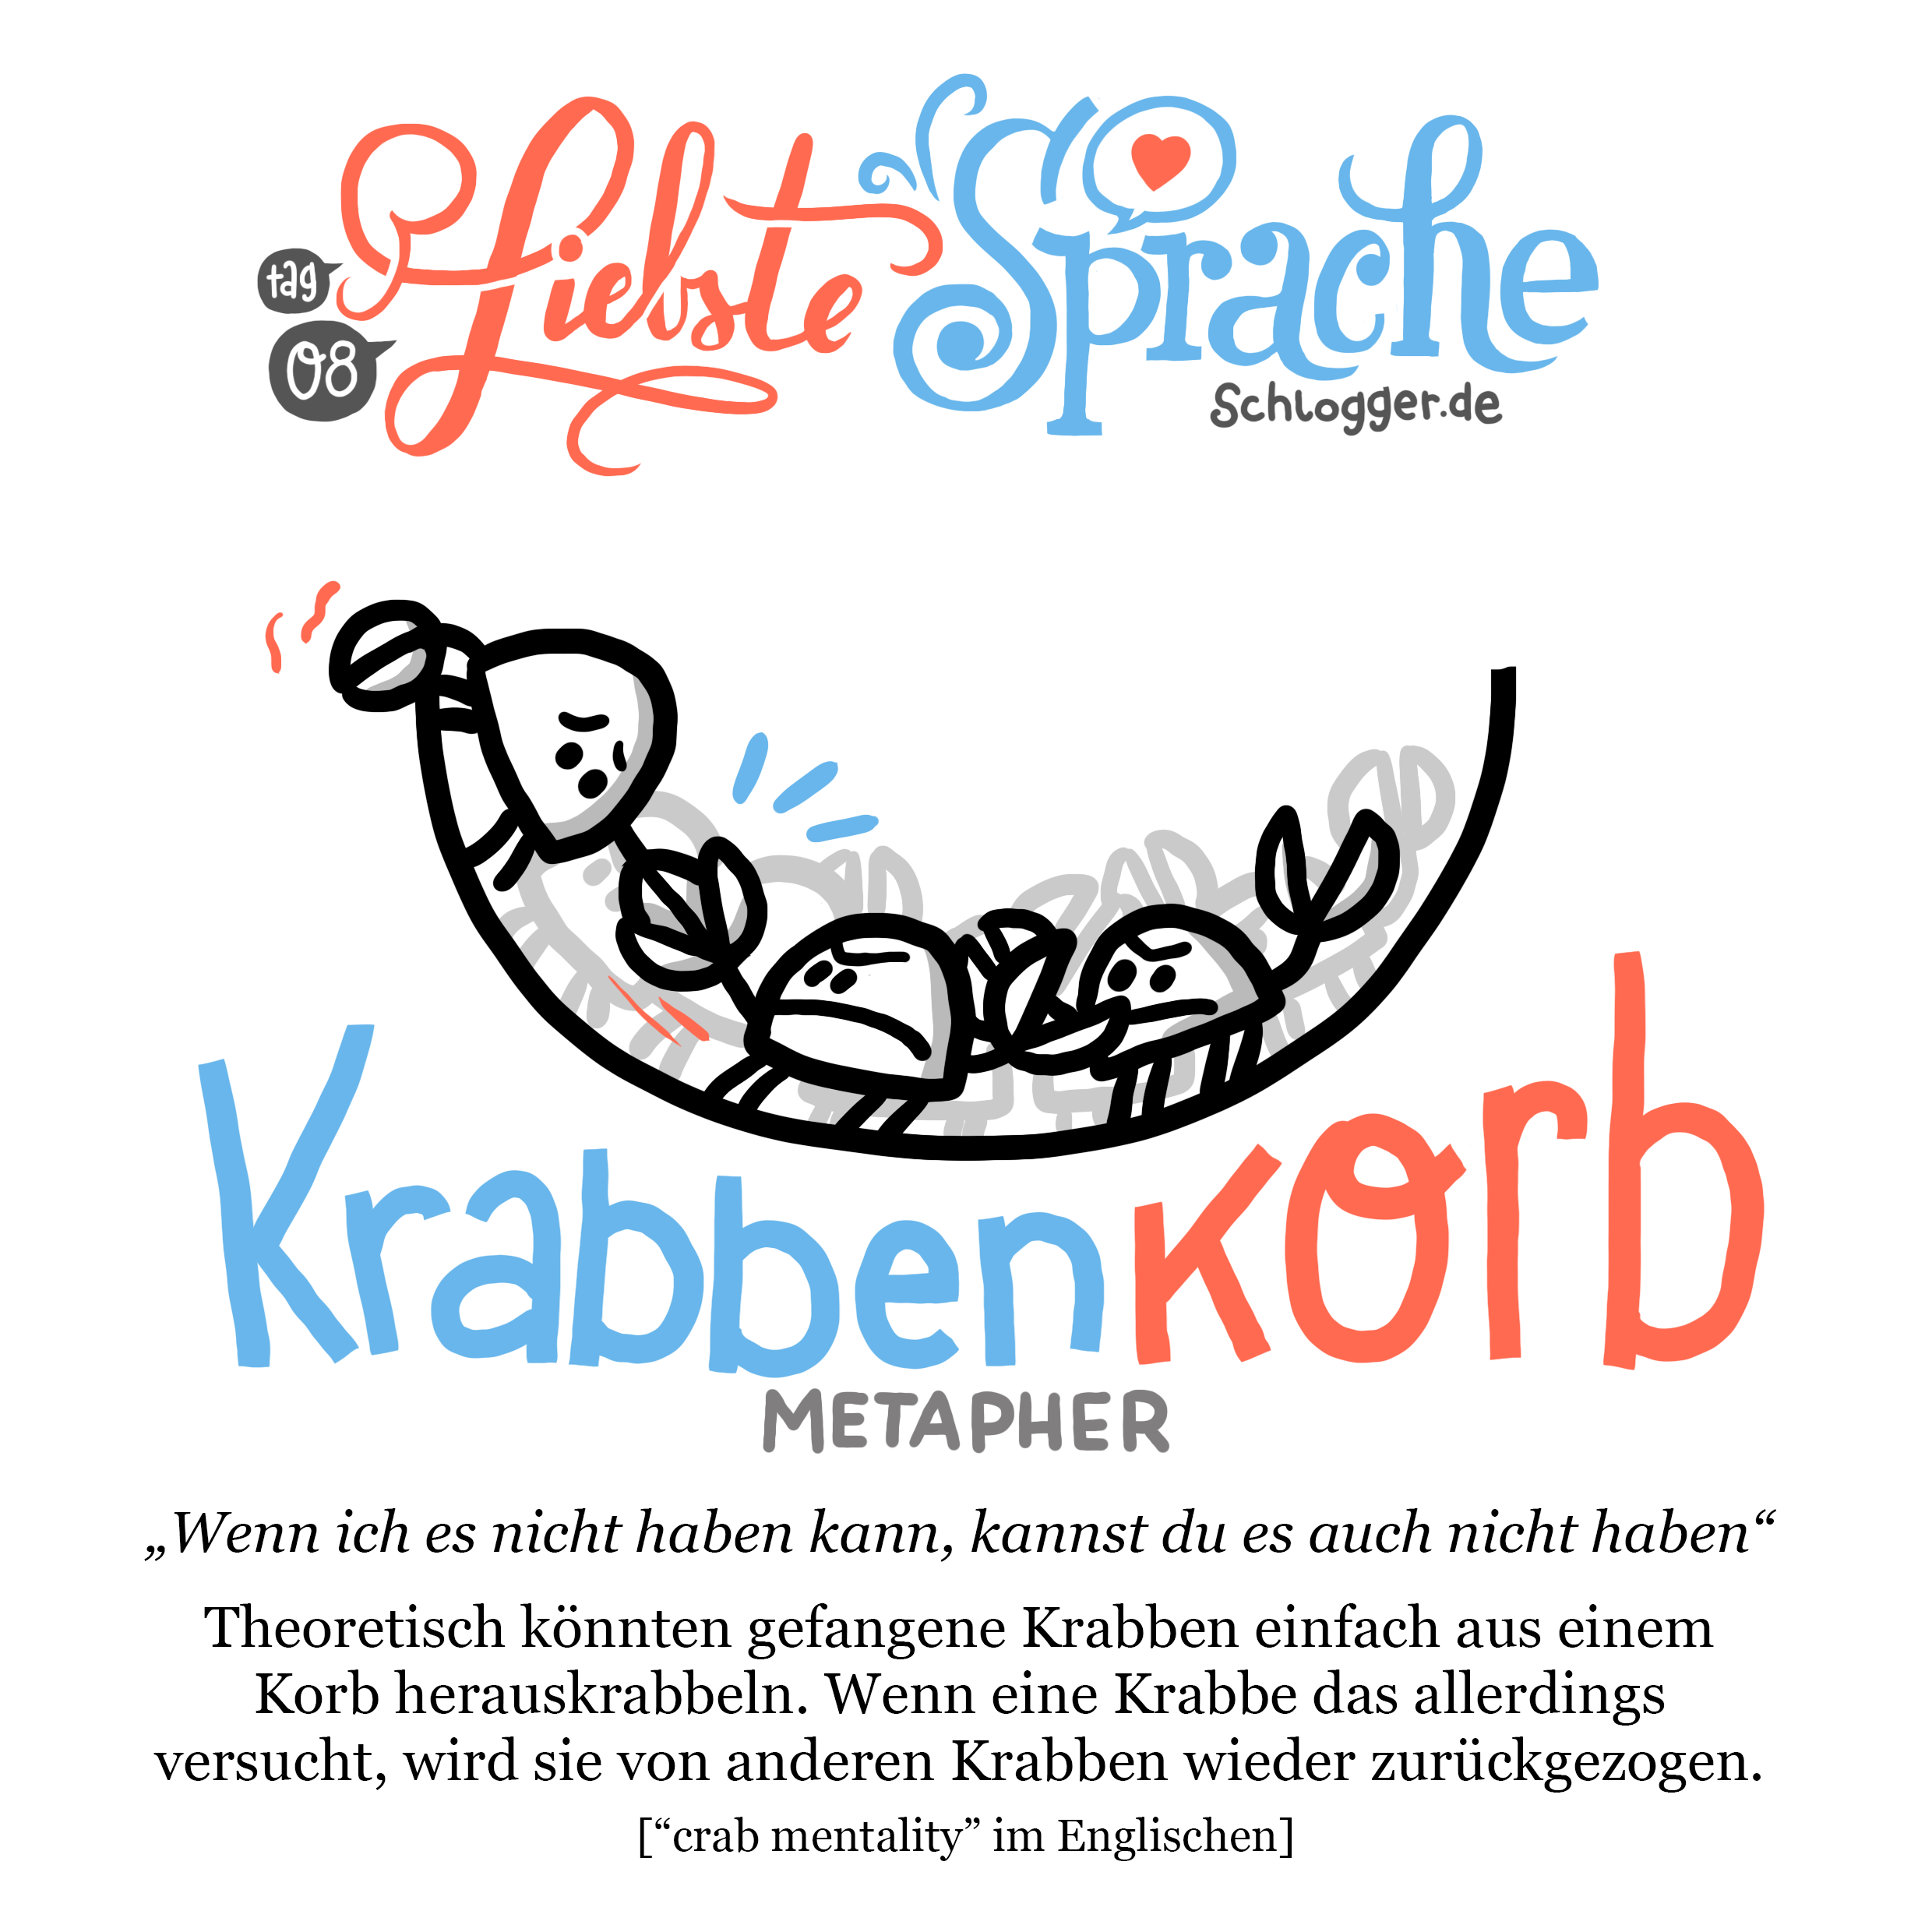 Liebste Sprache - #08 "Krabbenkorb"